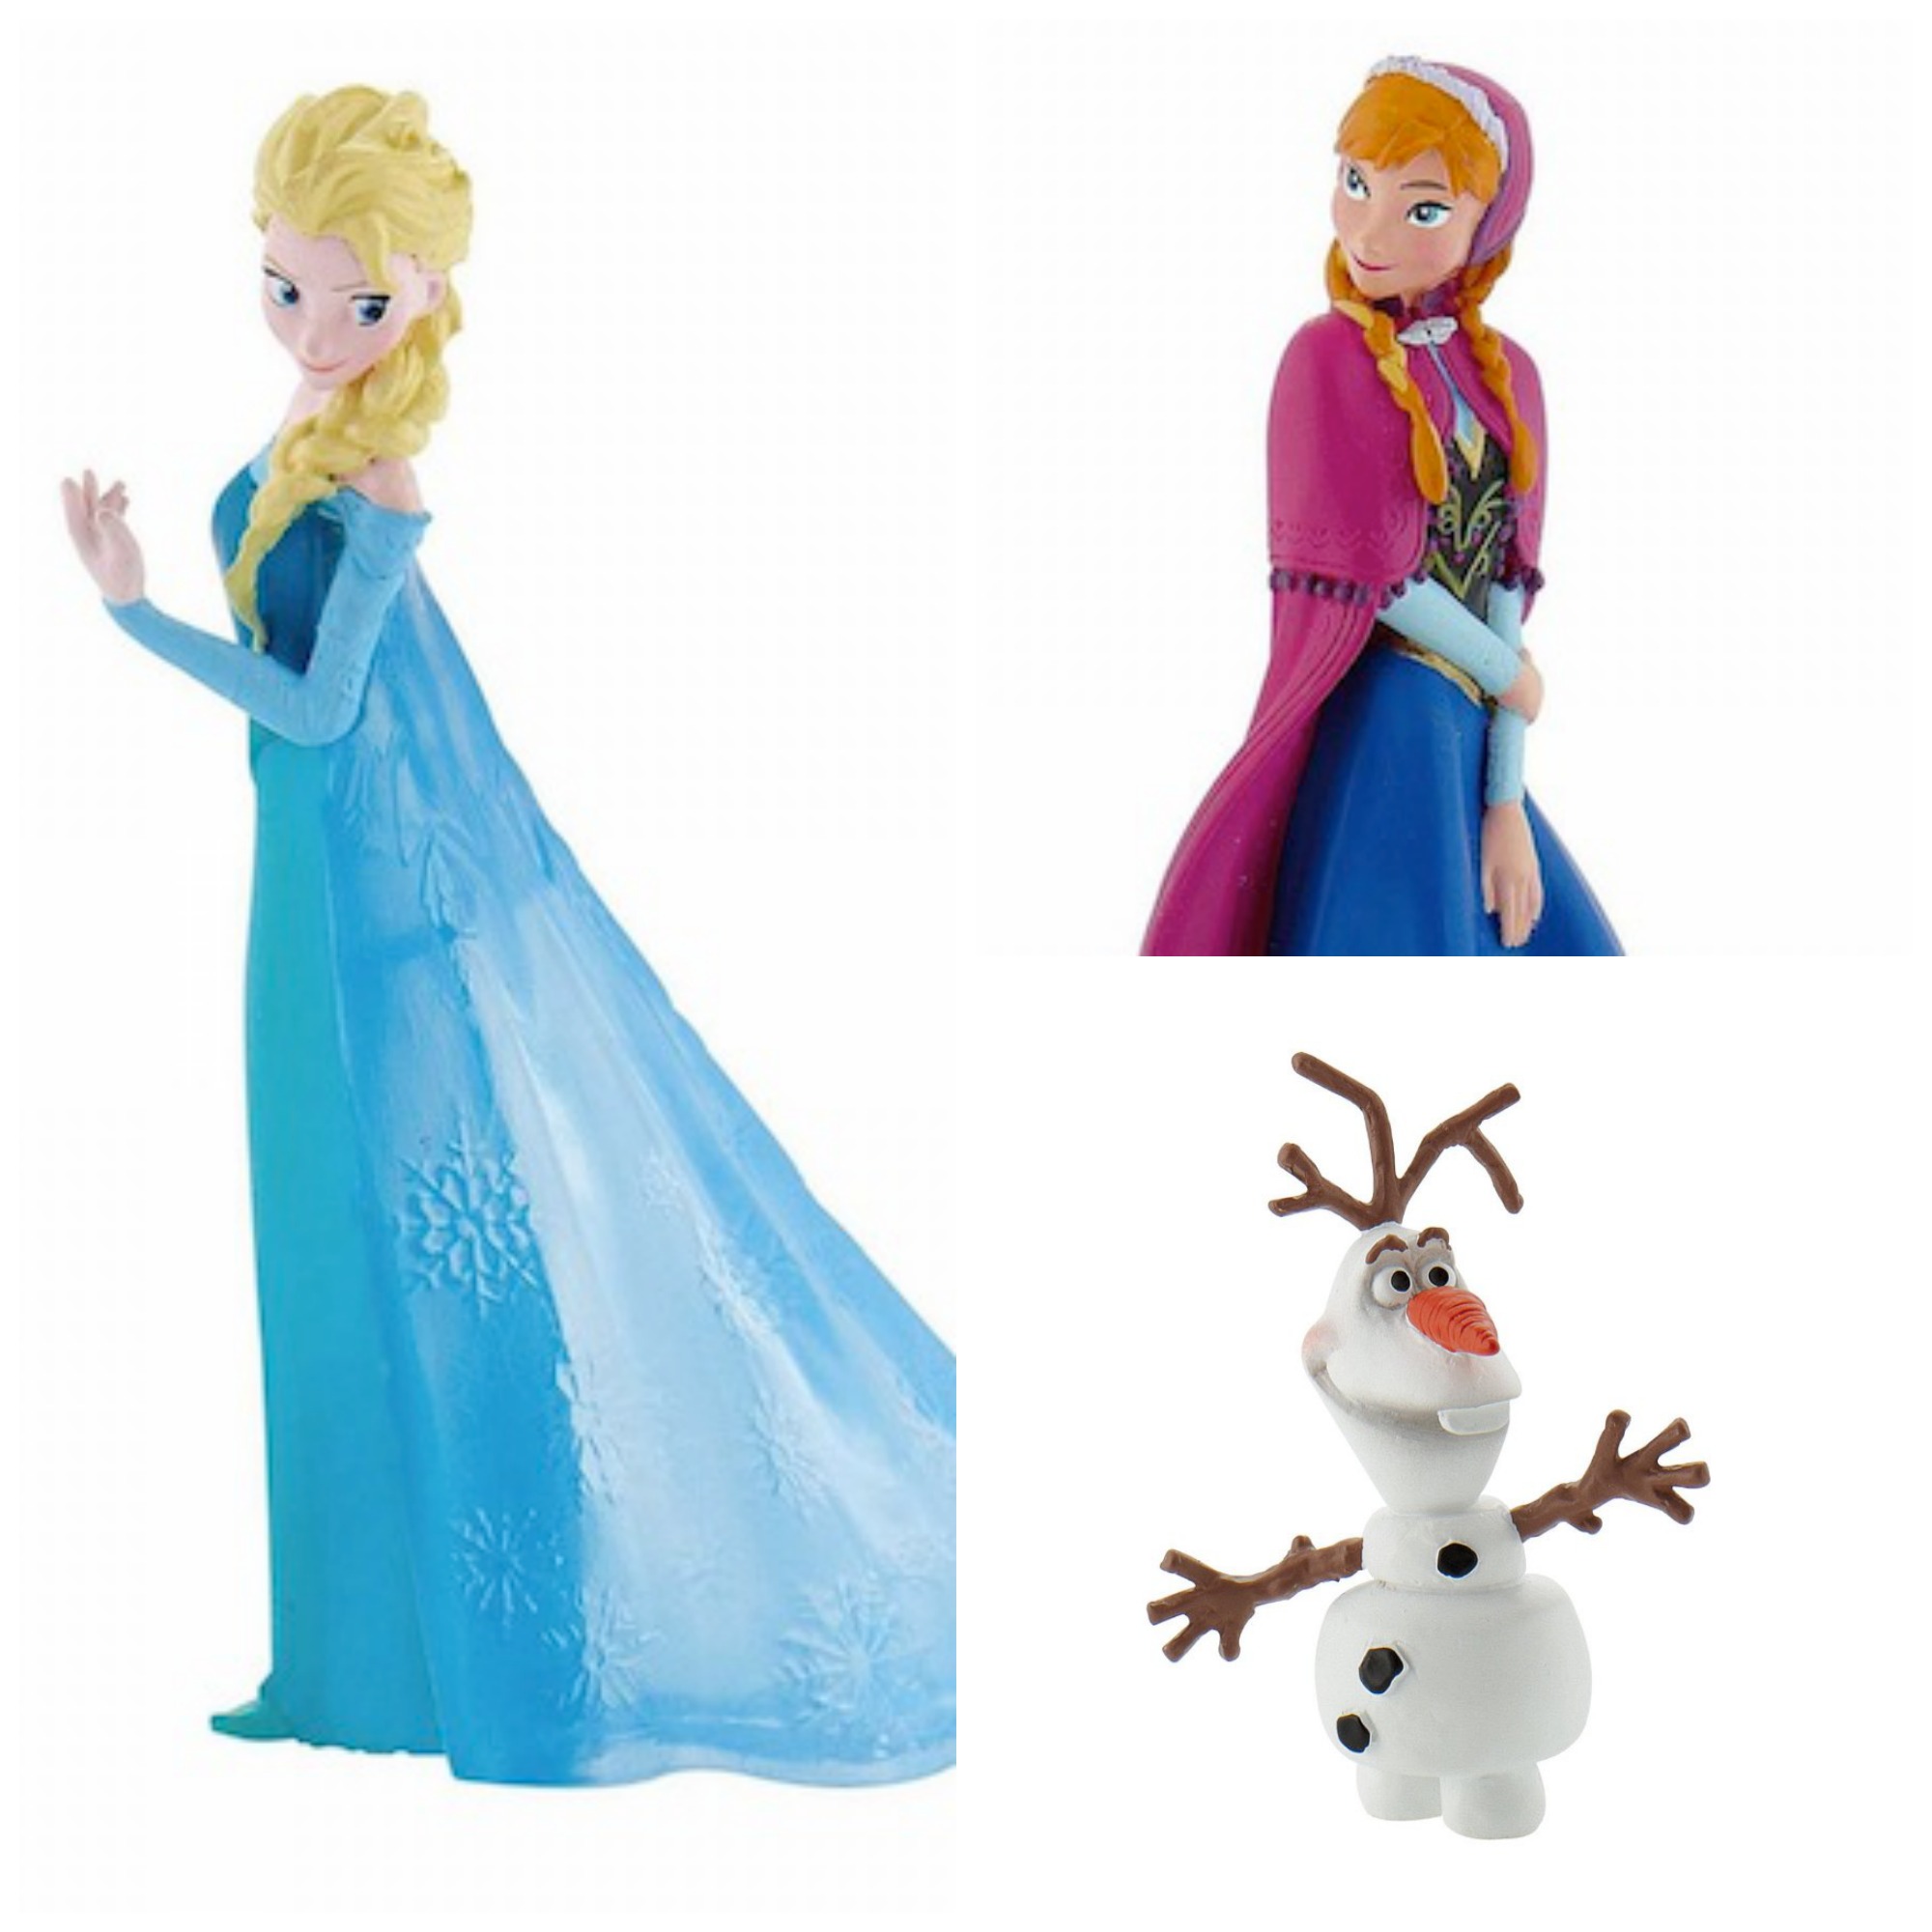 Minifiguras de Elsa, Anna y Olaf de Frozen